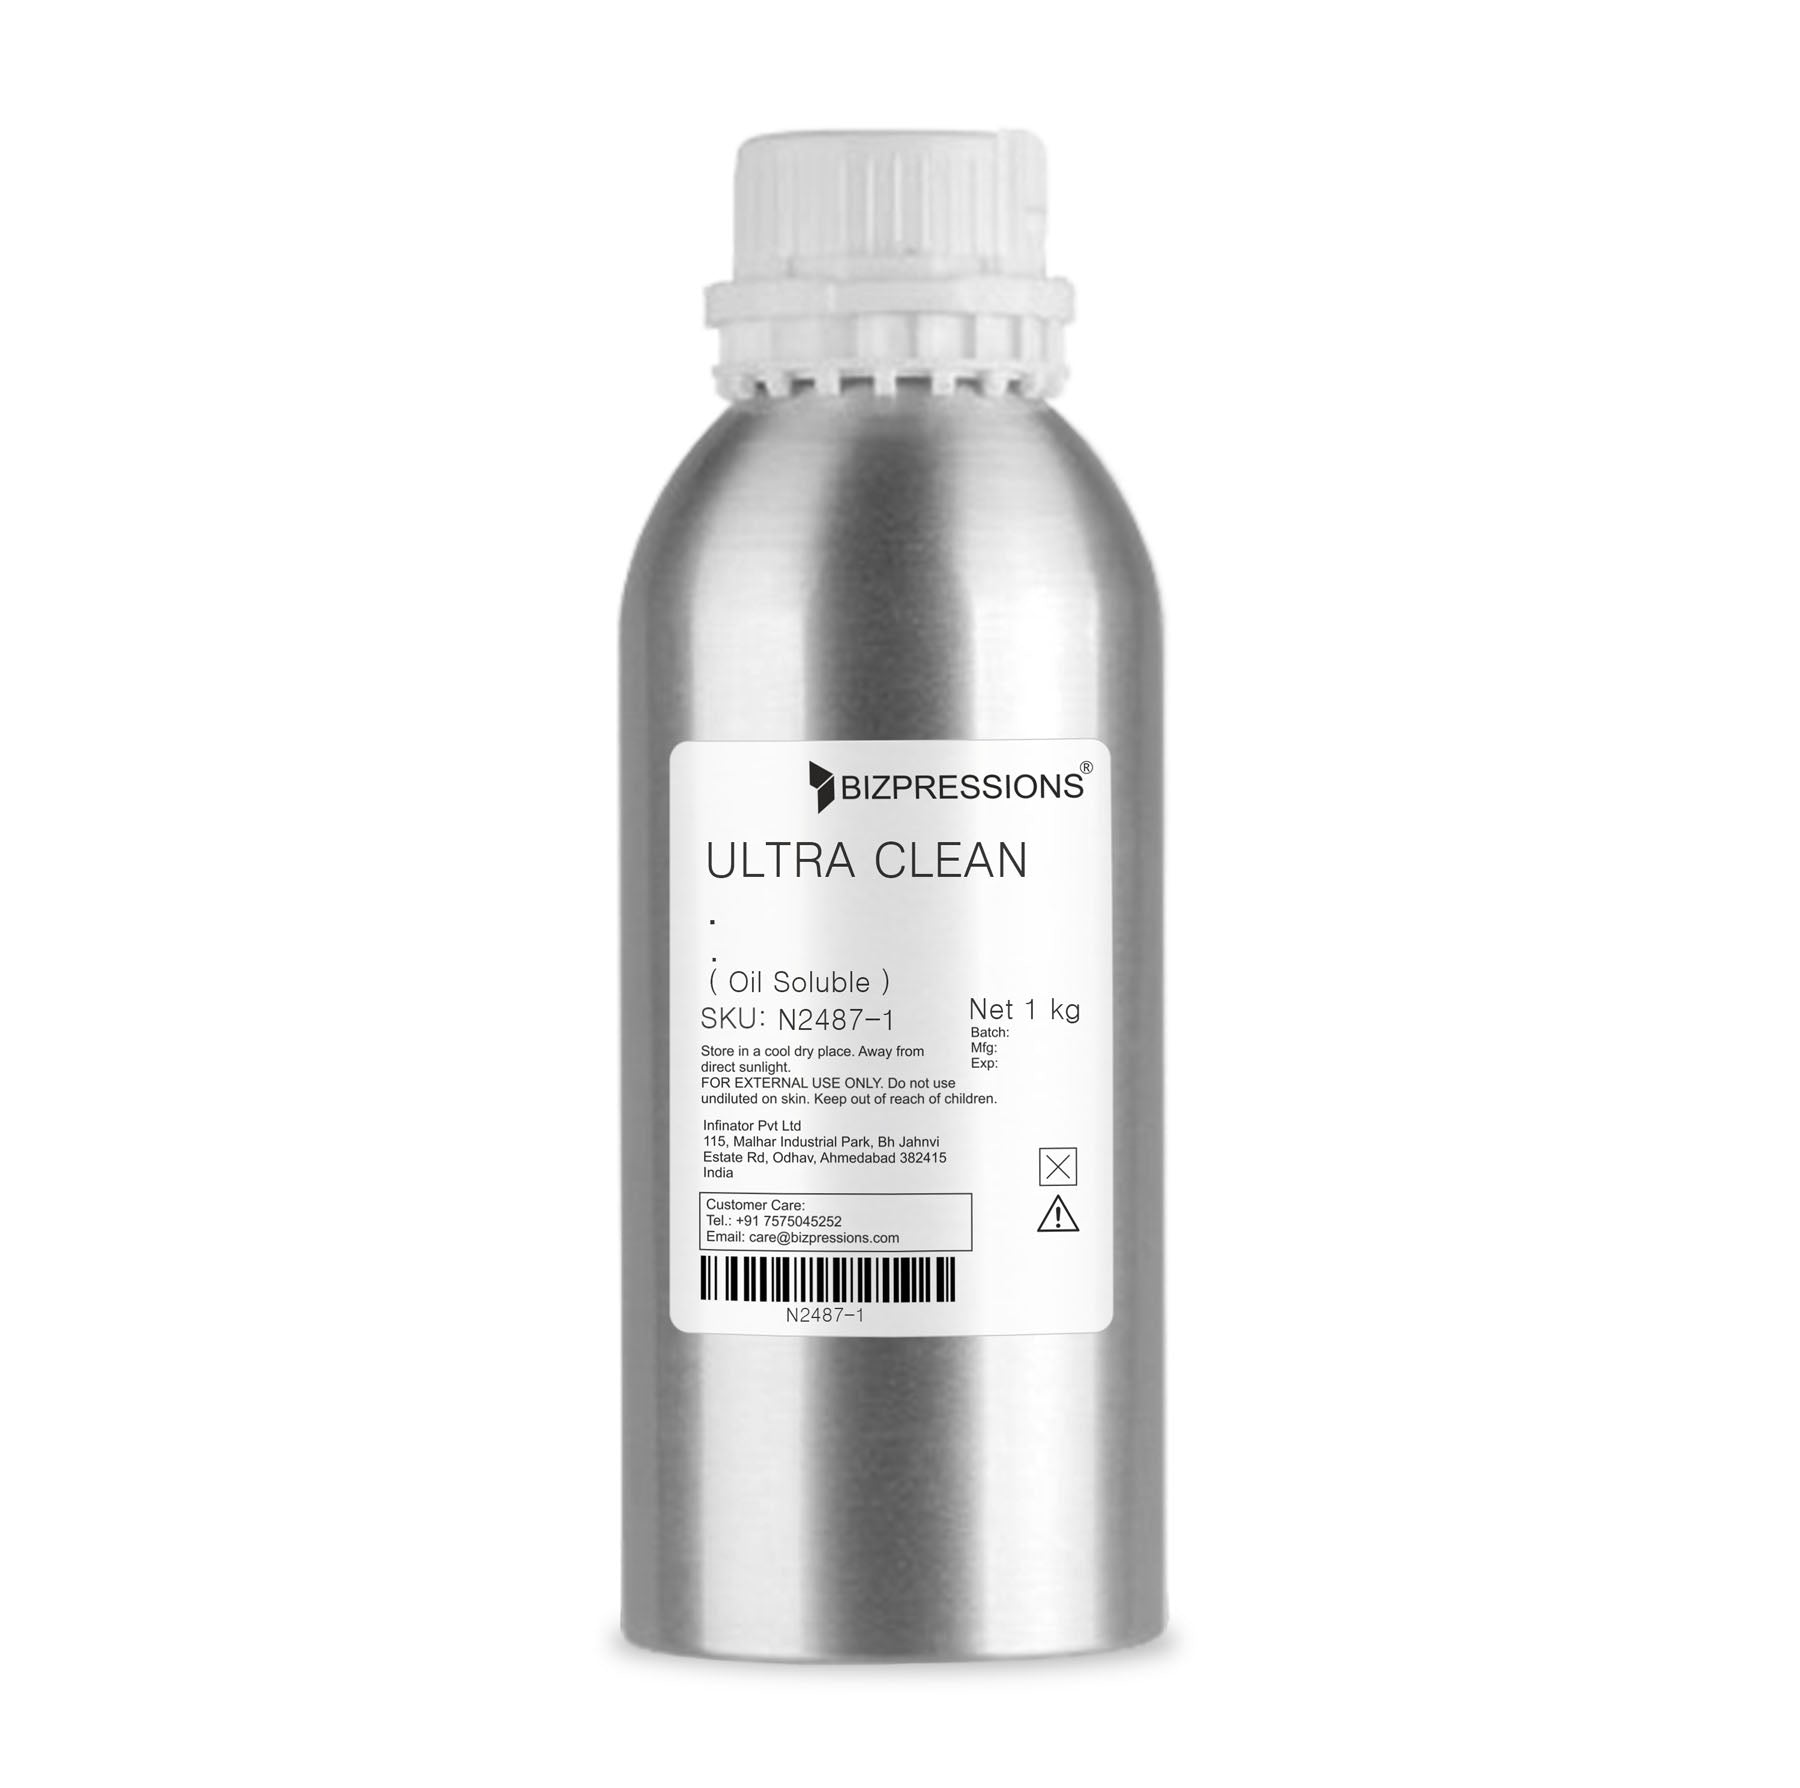 ULTRA CLEAN - Fragrance ( Oil Soluble ) - 1 kg